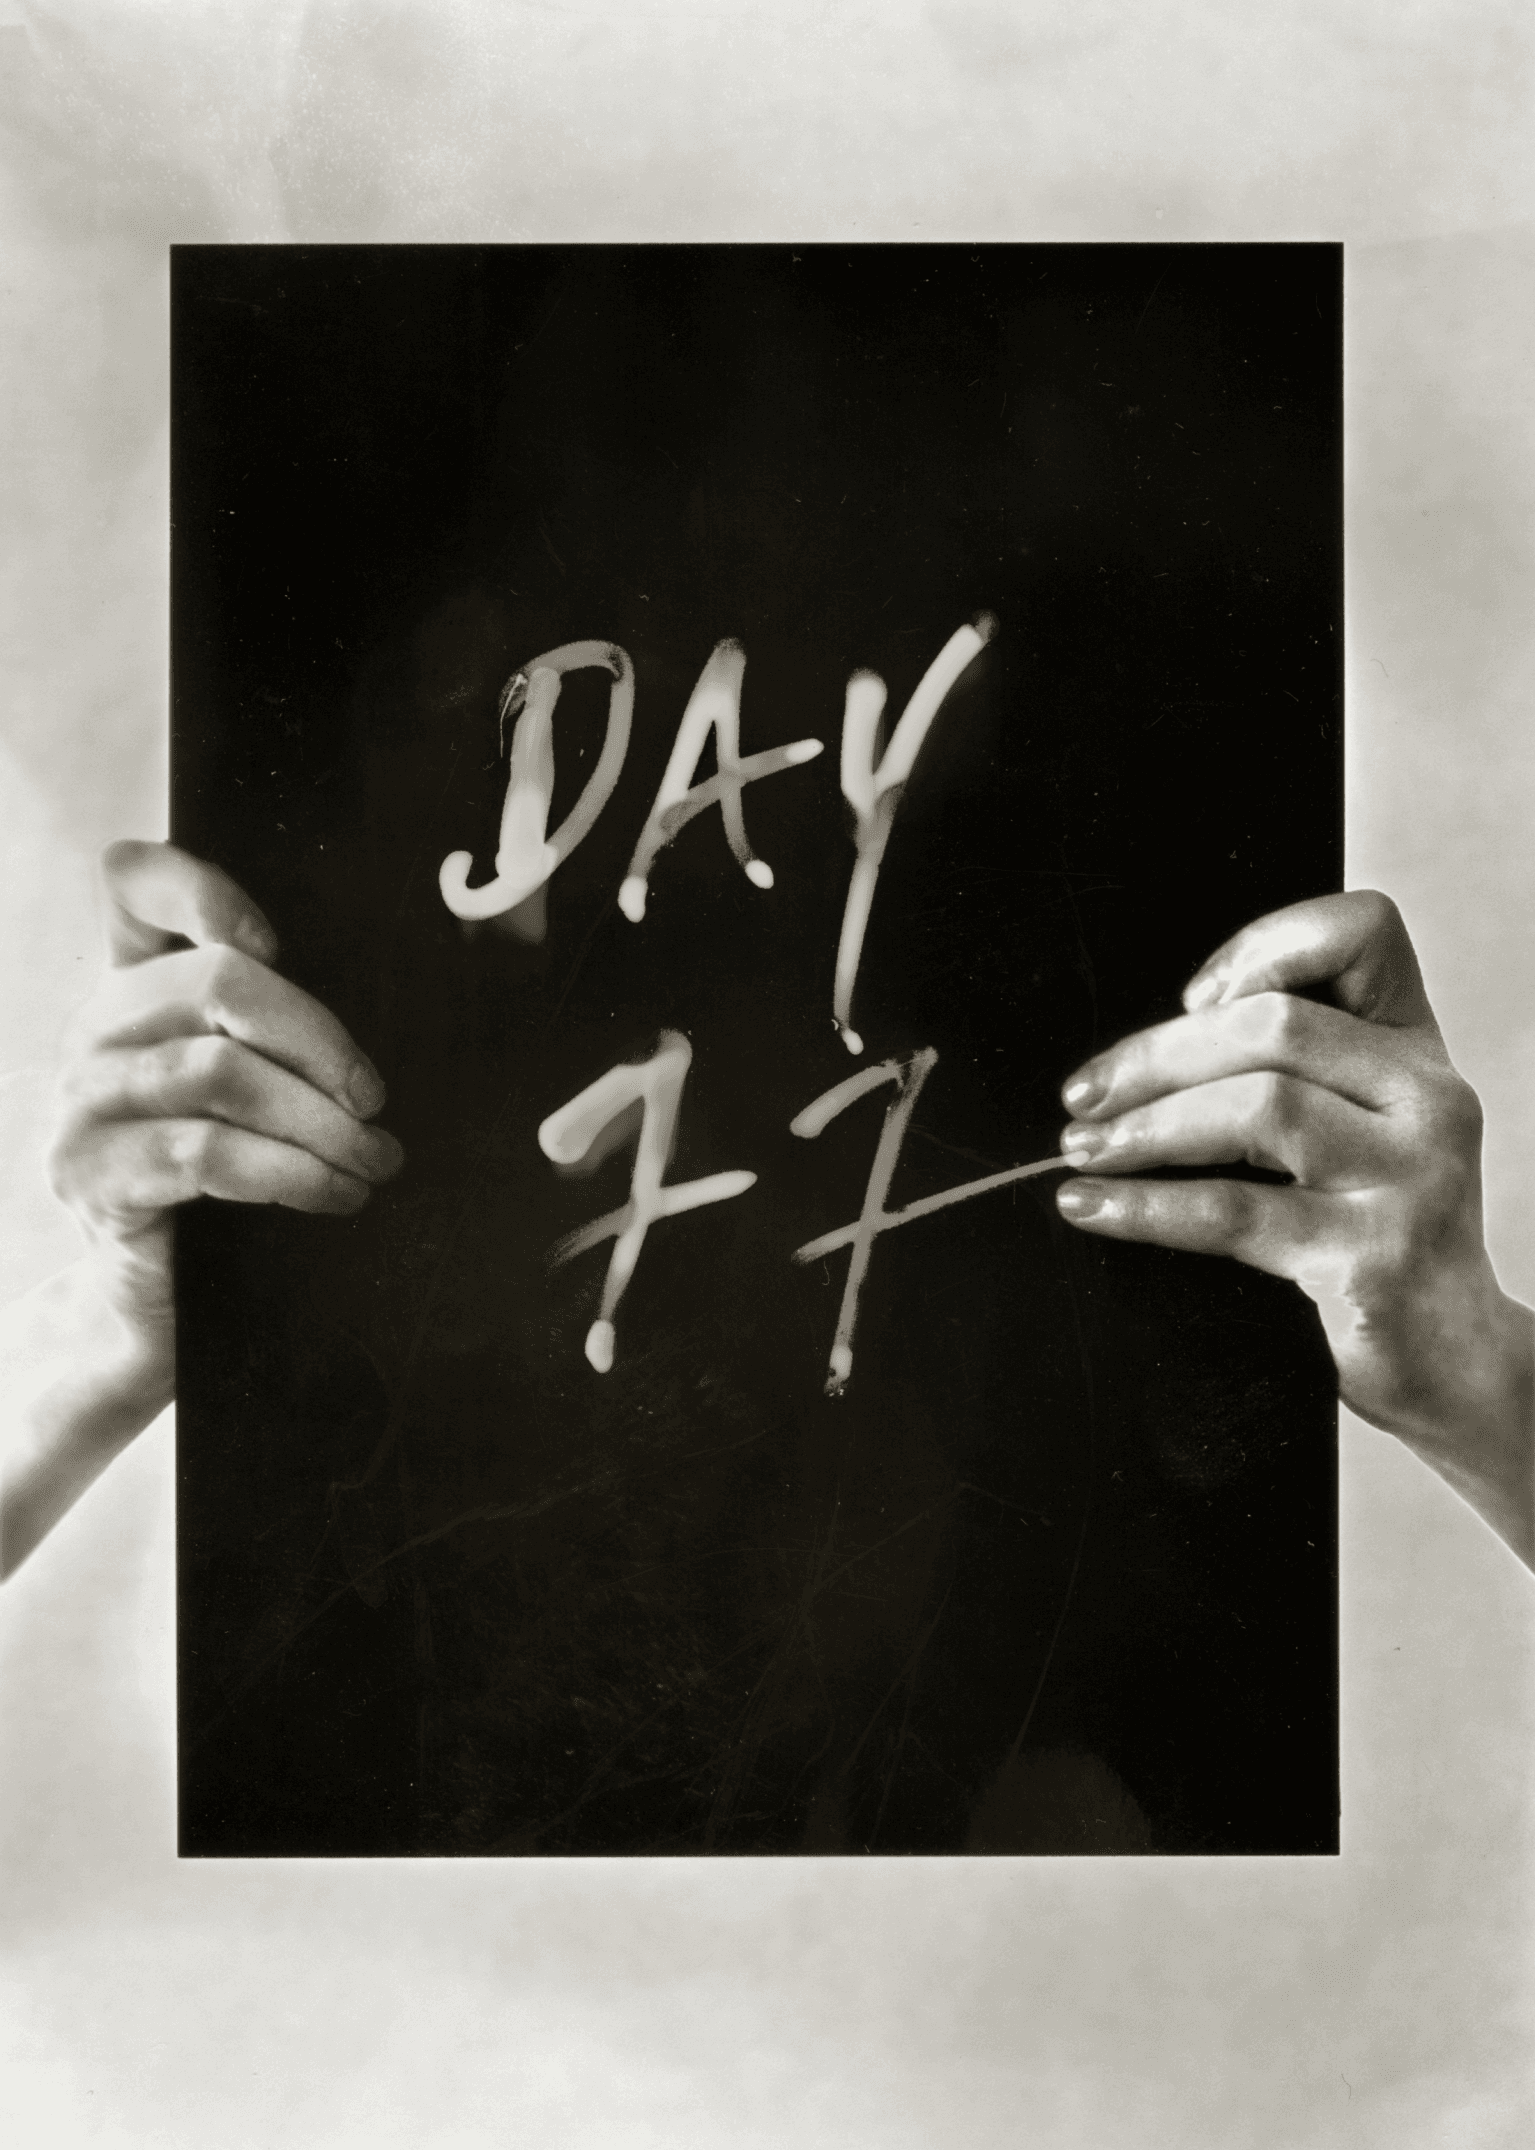 Day 77 - Wednesday, 05/11/2022